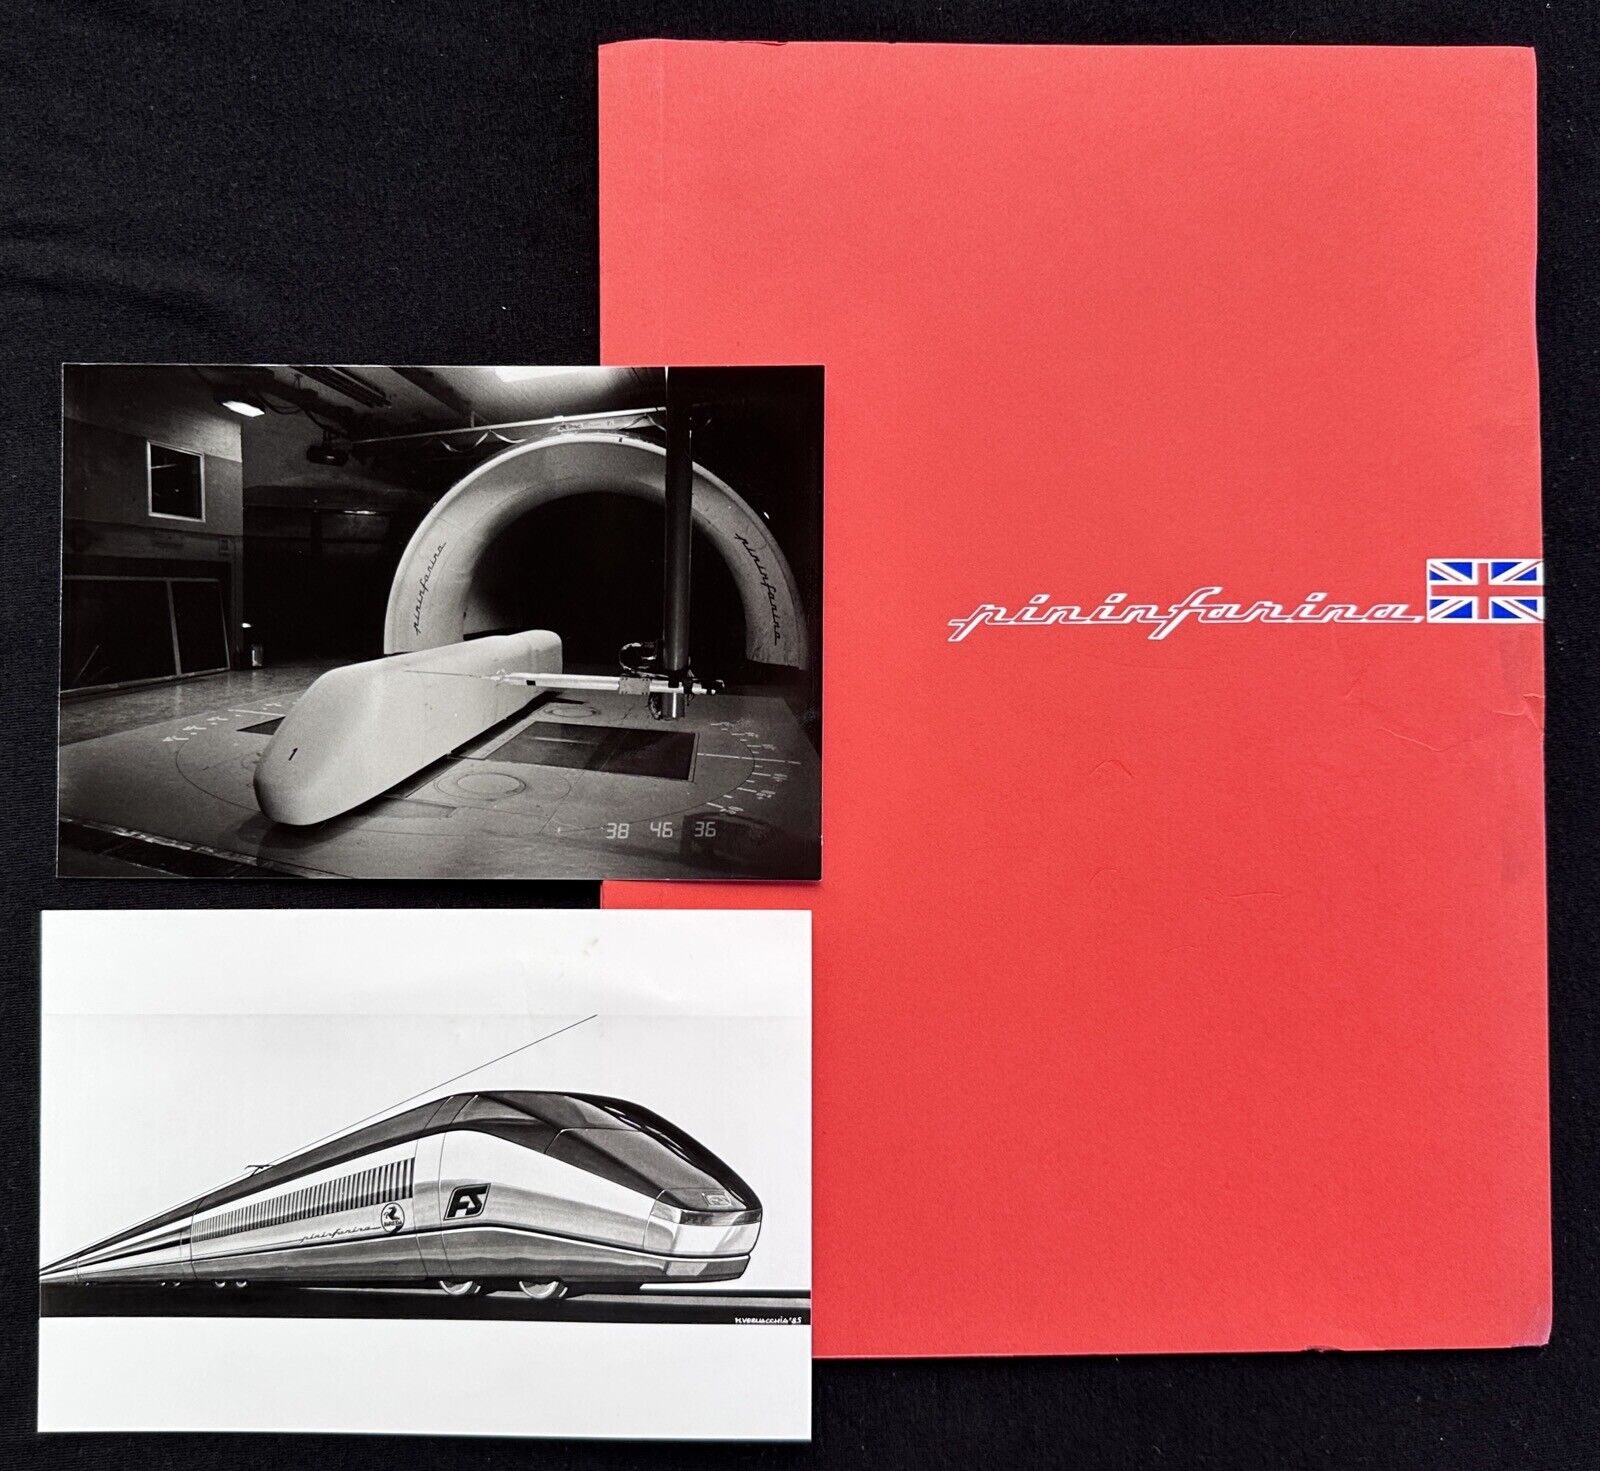 Pininfarina ETR 500 1987 Geneva Intl Transpublic Show Press Kit High Speed Train